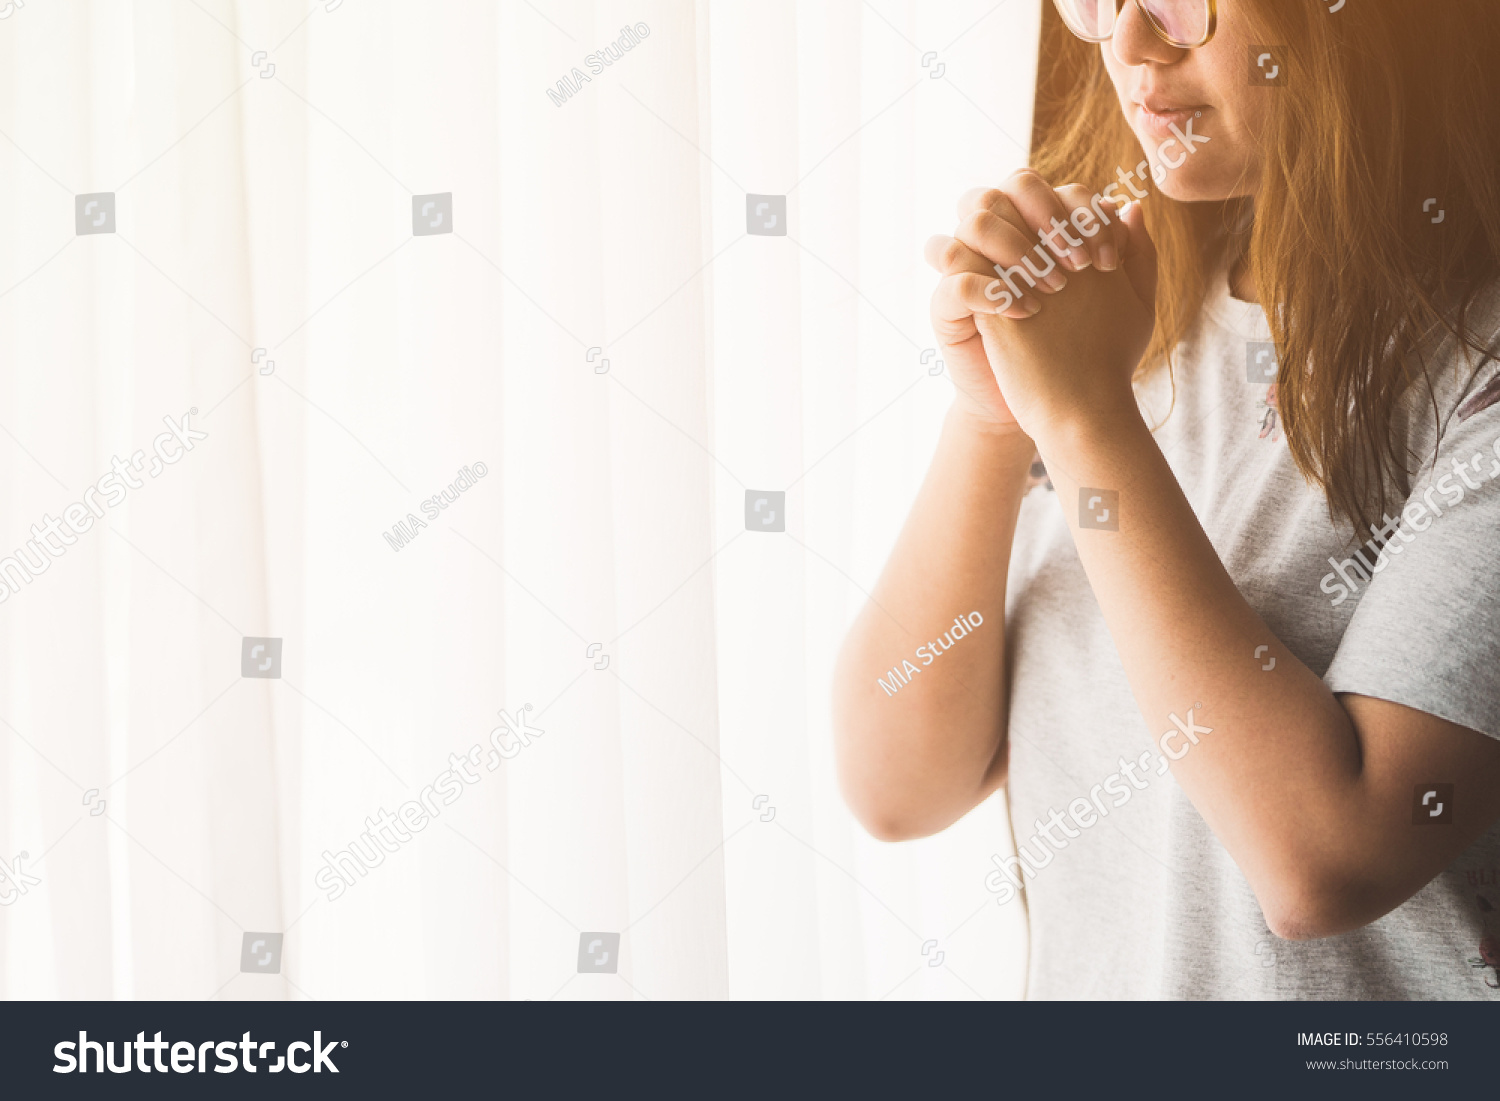 stock-photo-woman-praying-near-the-window-in-the-morning-teenager-woman-hand-praying-hands-folded-in-prayer-556410598.jpg